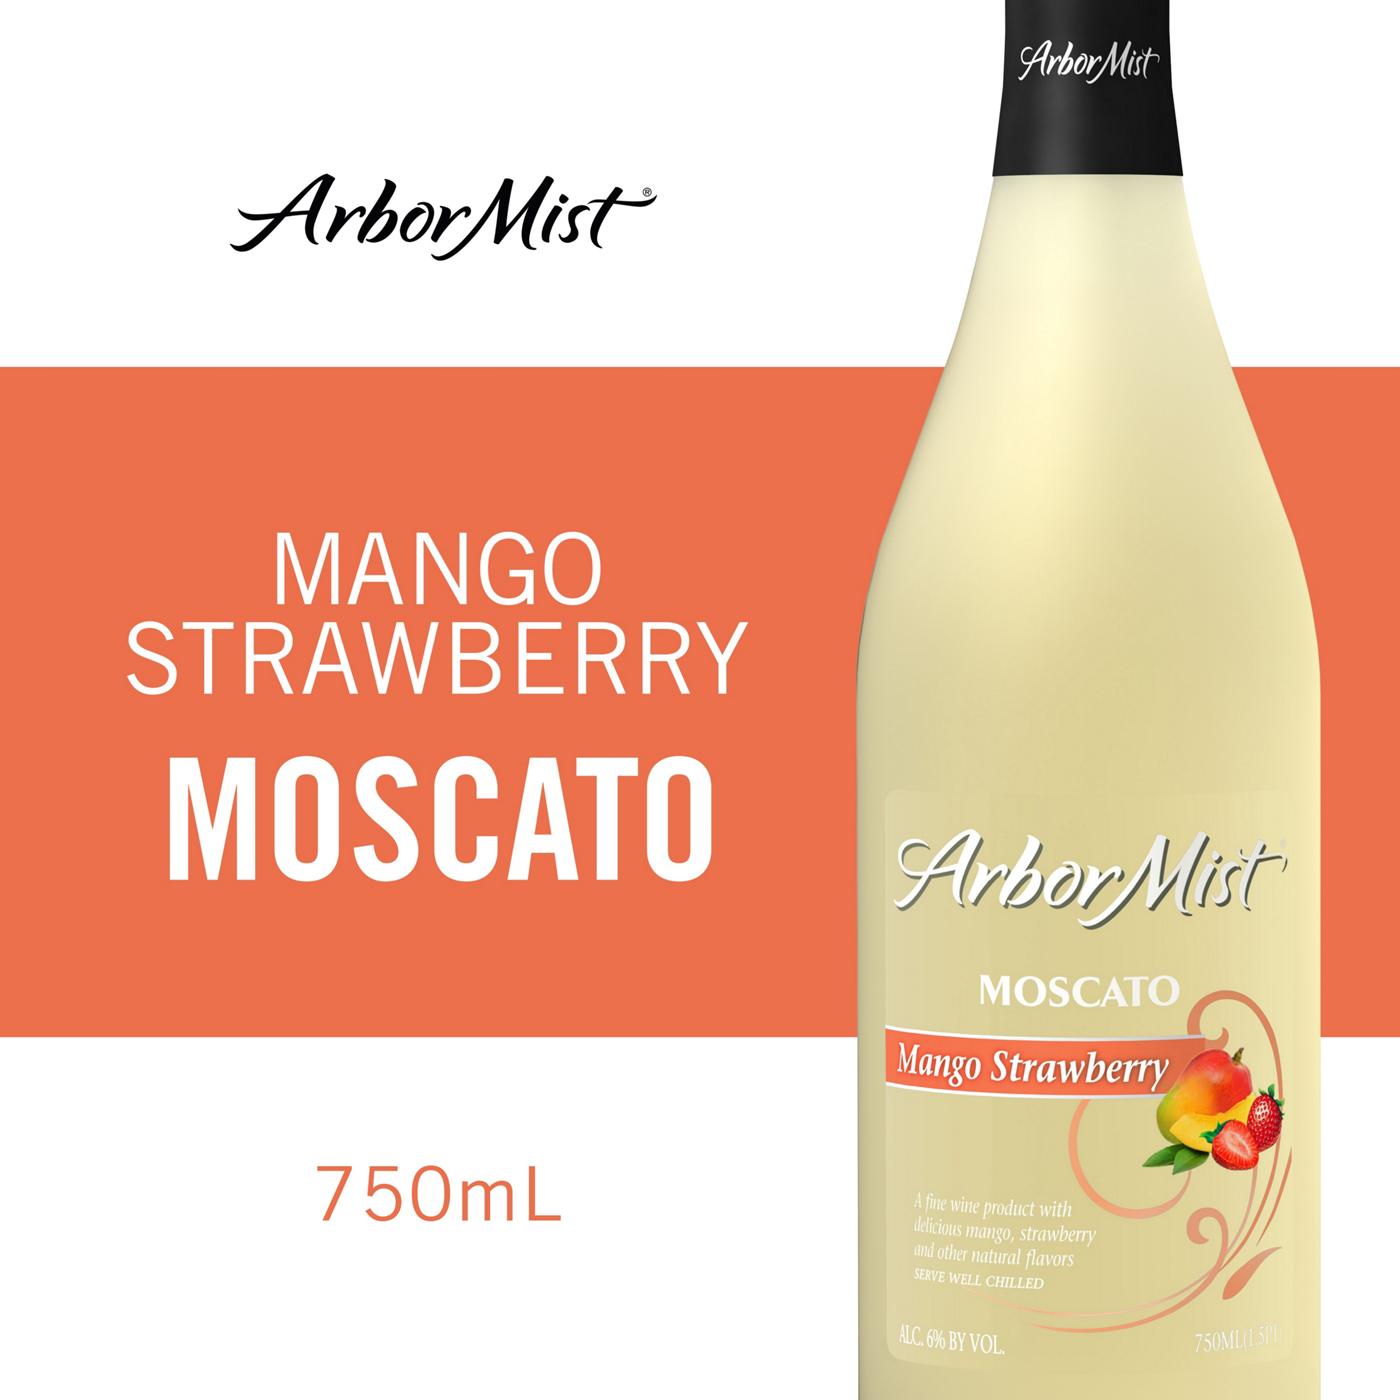 Arbor Mist Mango Strawberry Moscato Wine; image 5 of 5